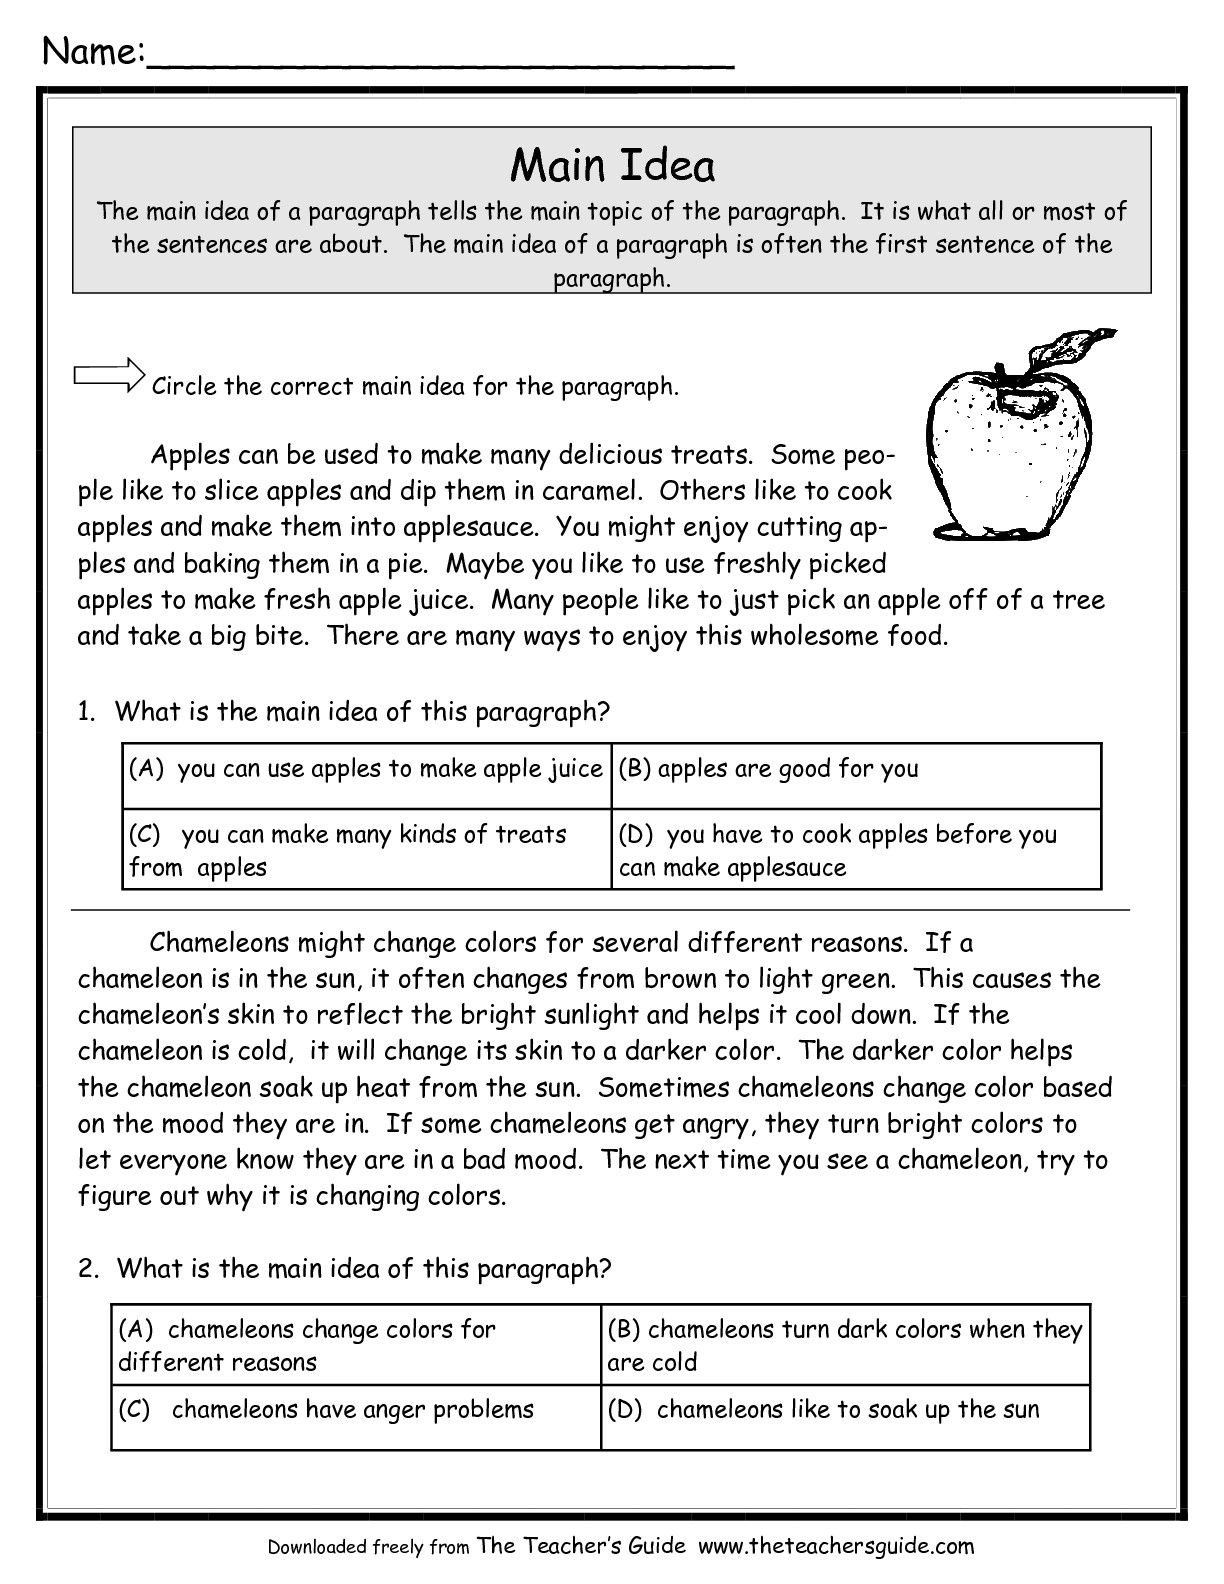 Main Idea Multiple Choice Worksheets 9th Grade